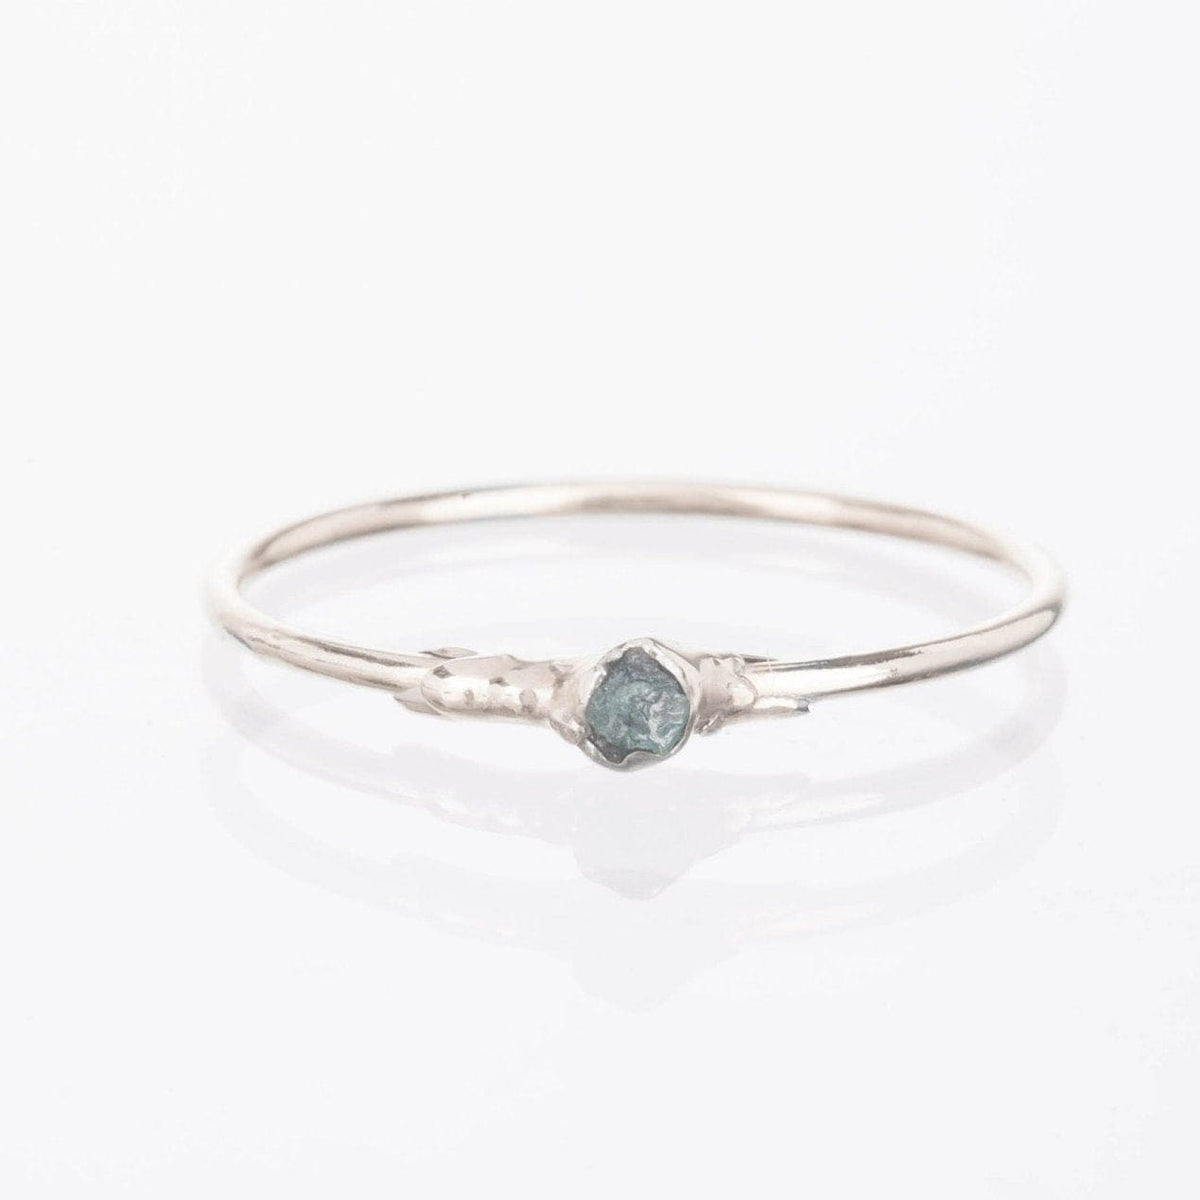 Raw Blue Diamond Ring in Sterling Silver Gemstone Jewelry